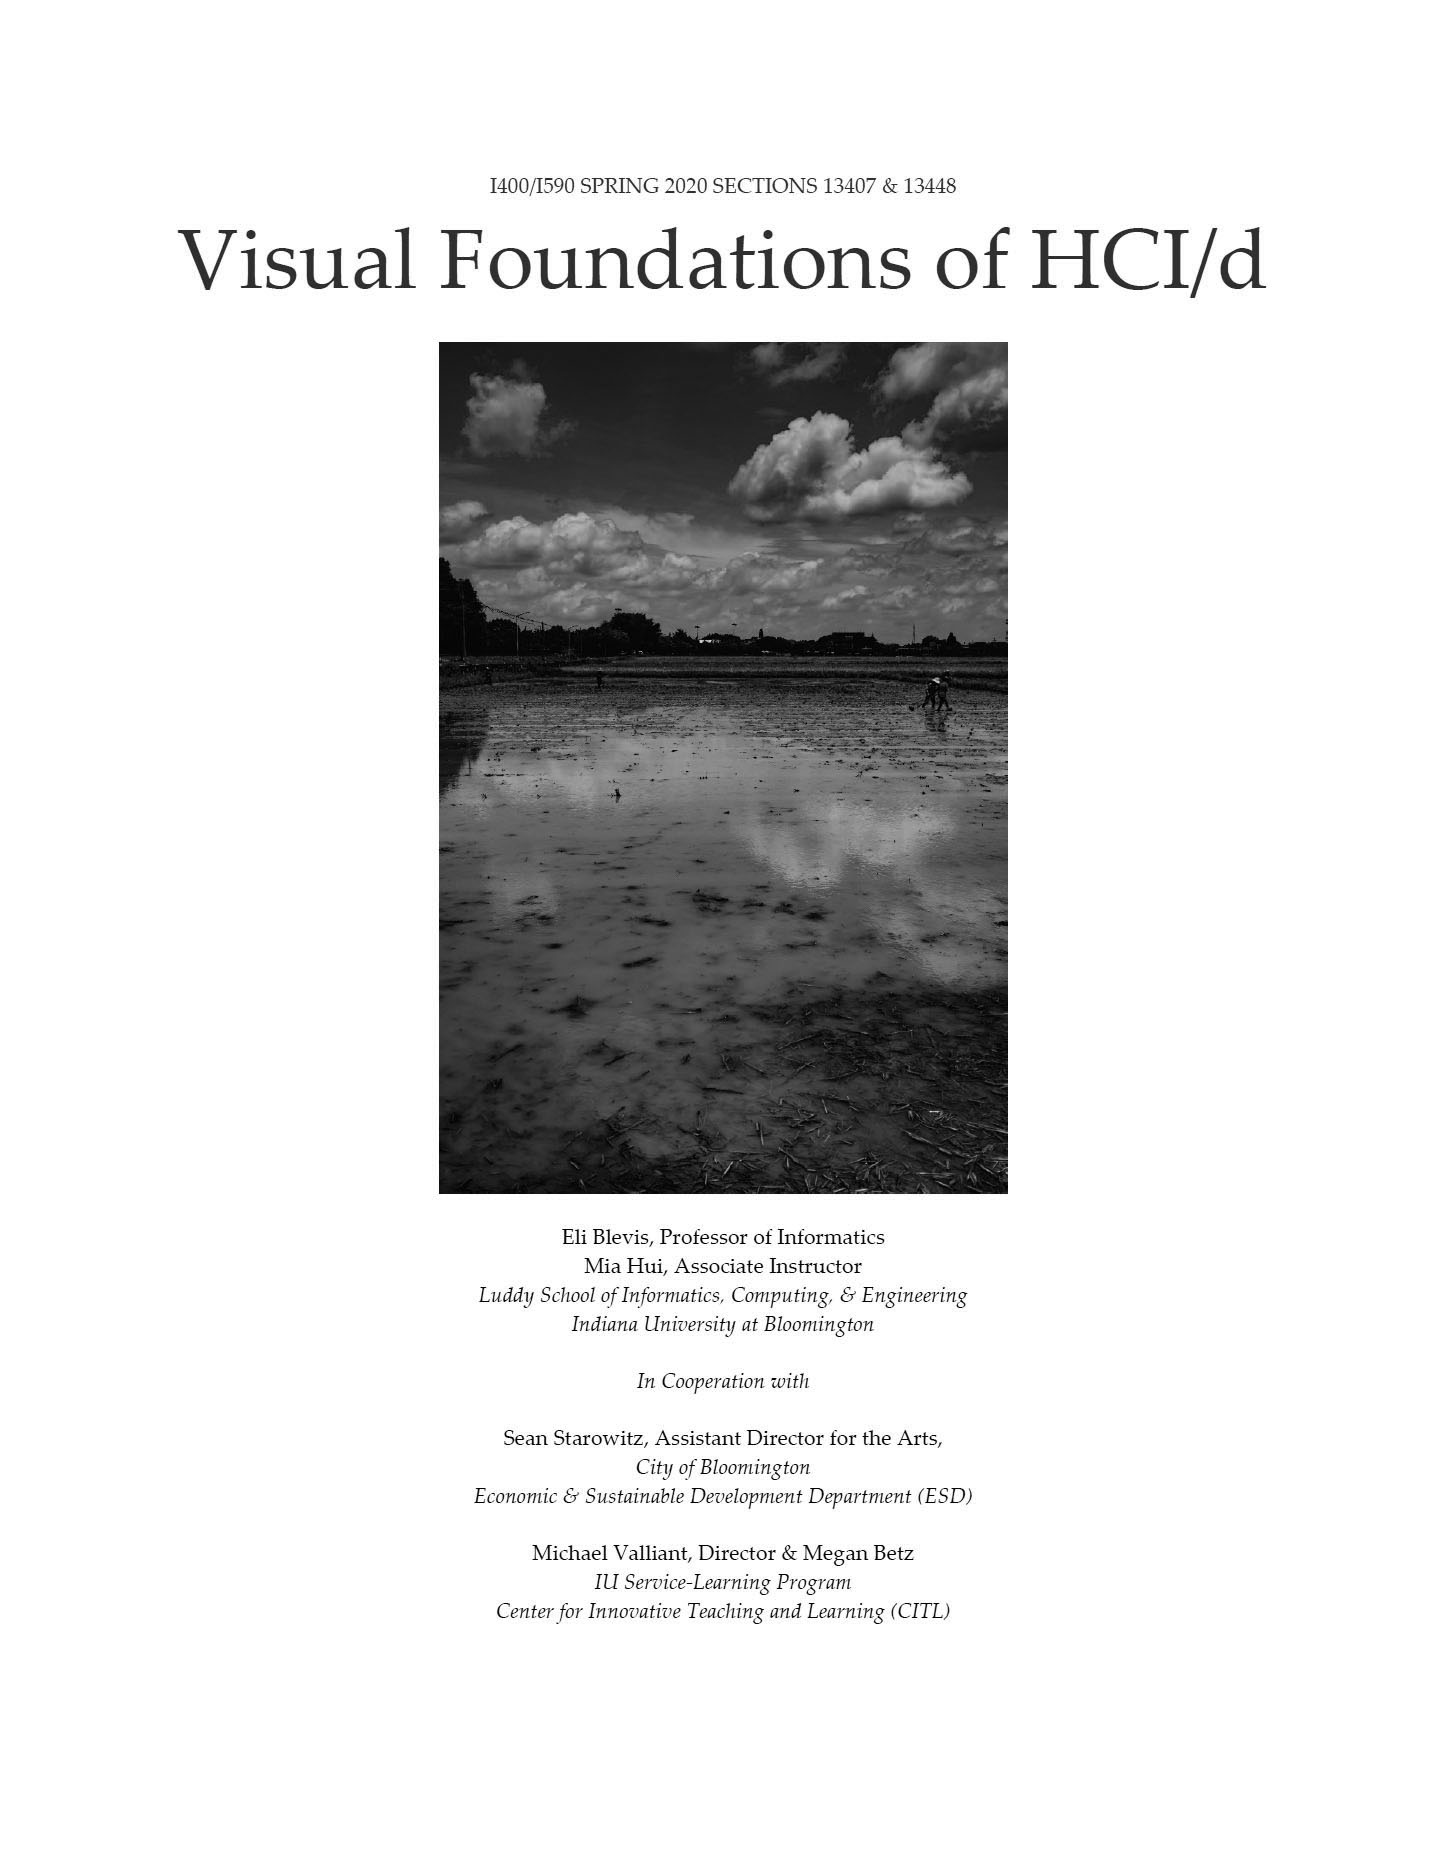 Syllabus: Visual Foundations of HCI/d